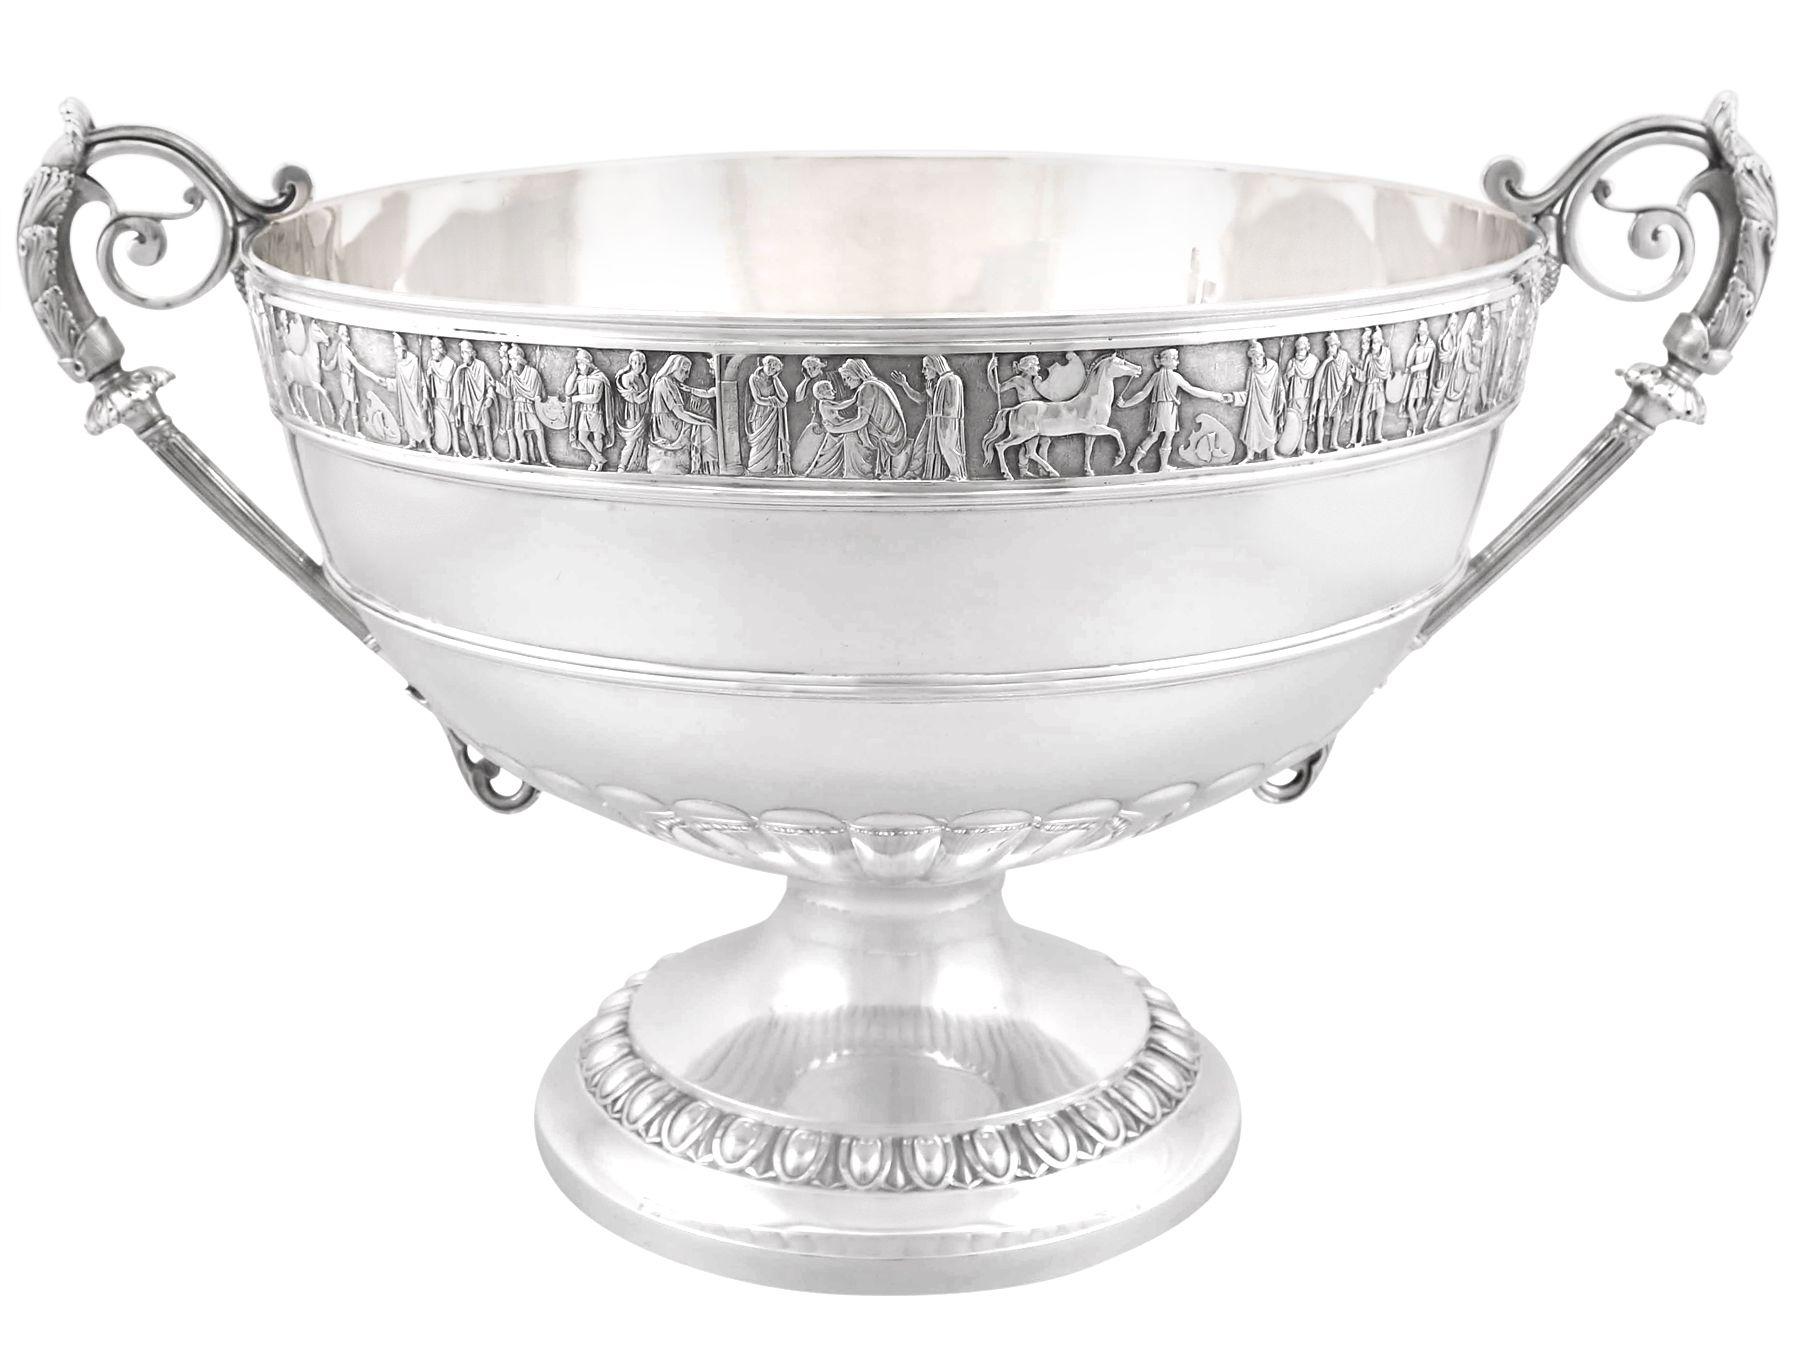 Molded Antique Victorian 1899 Sterling Silver Presentation Bowl For Sale